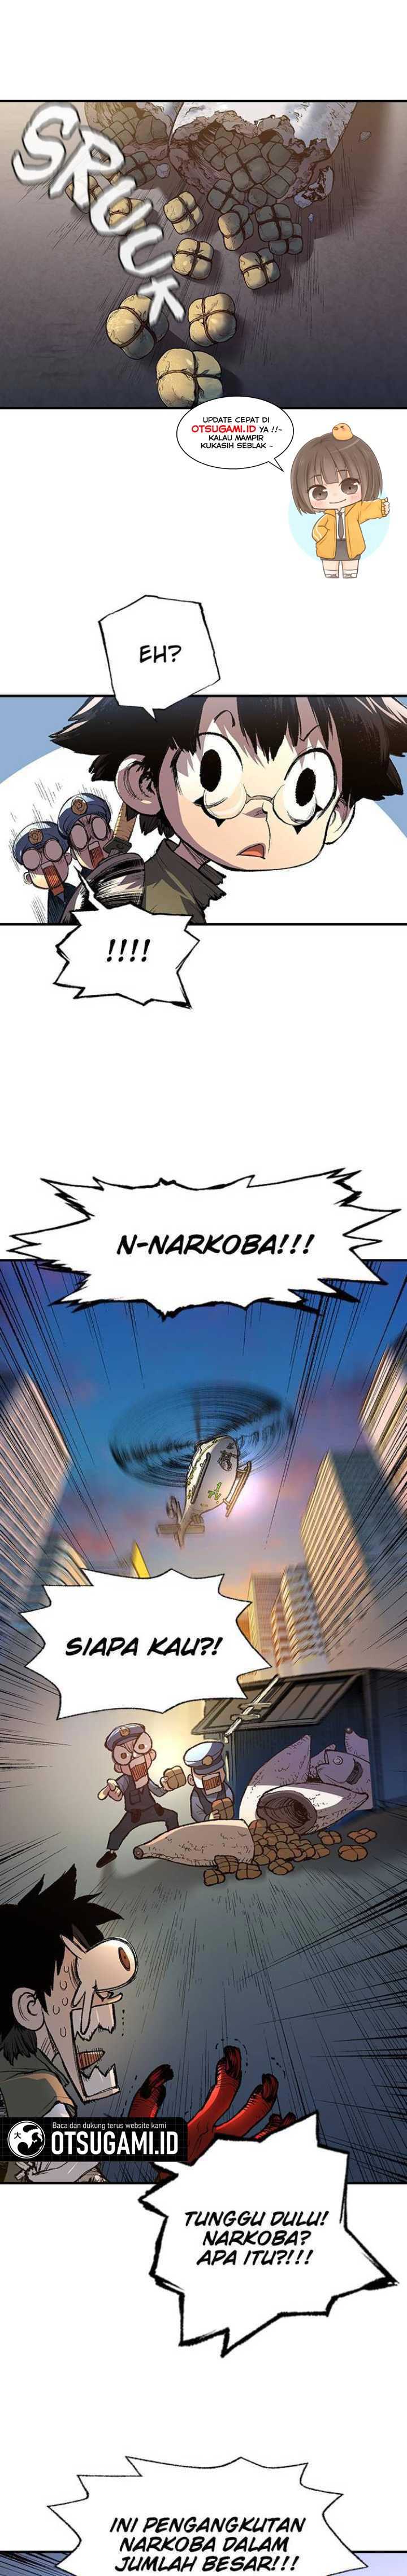 Super String: Isekai Kenbunroku (webtoon) Chapter 3